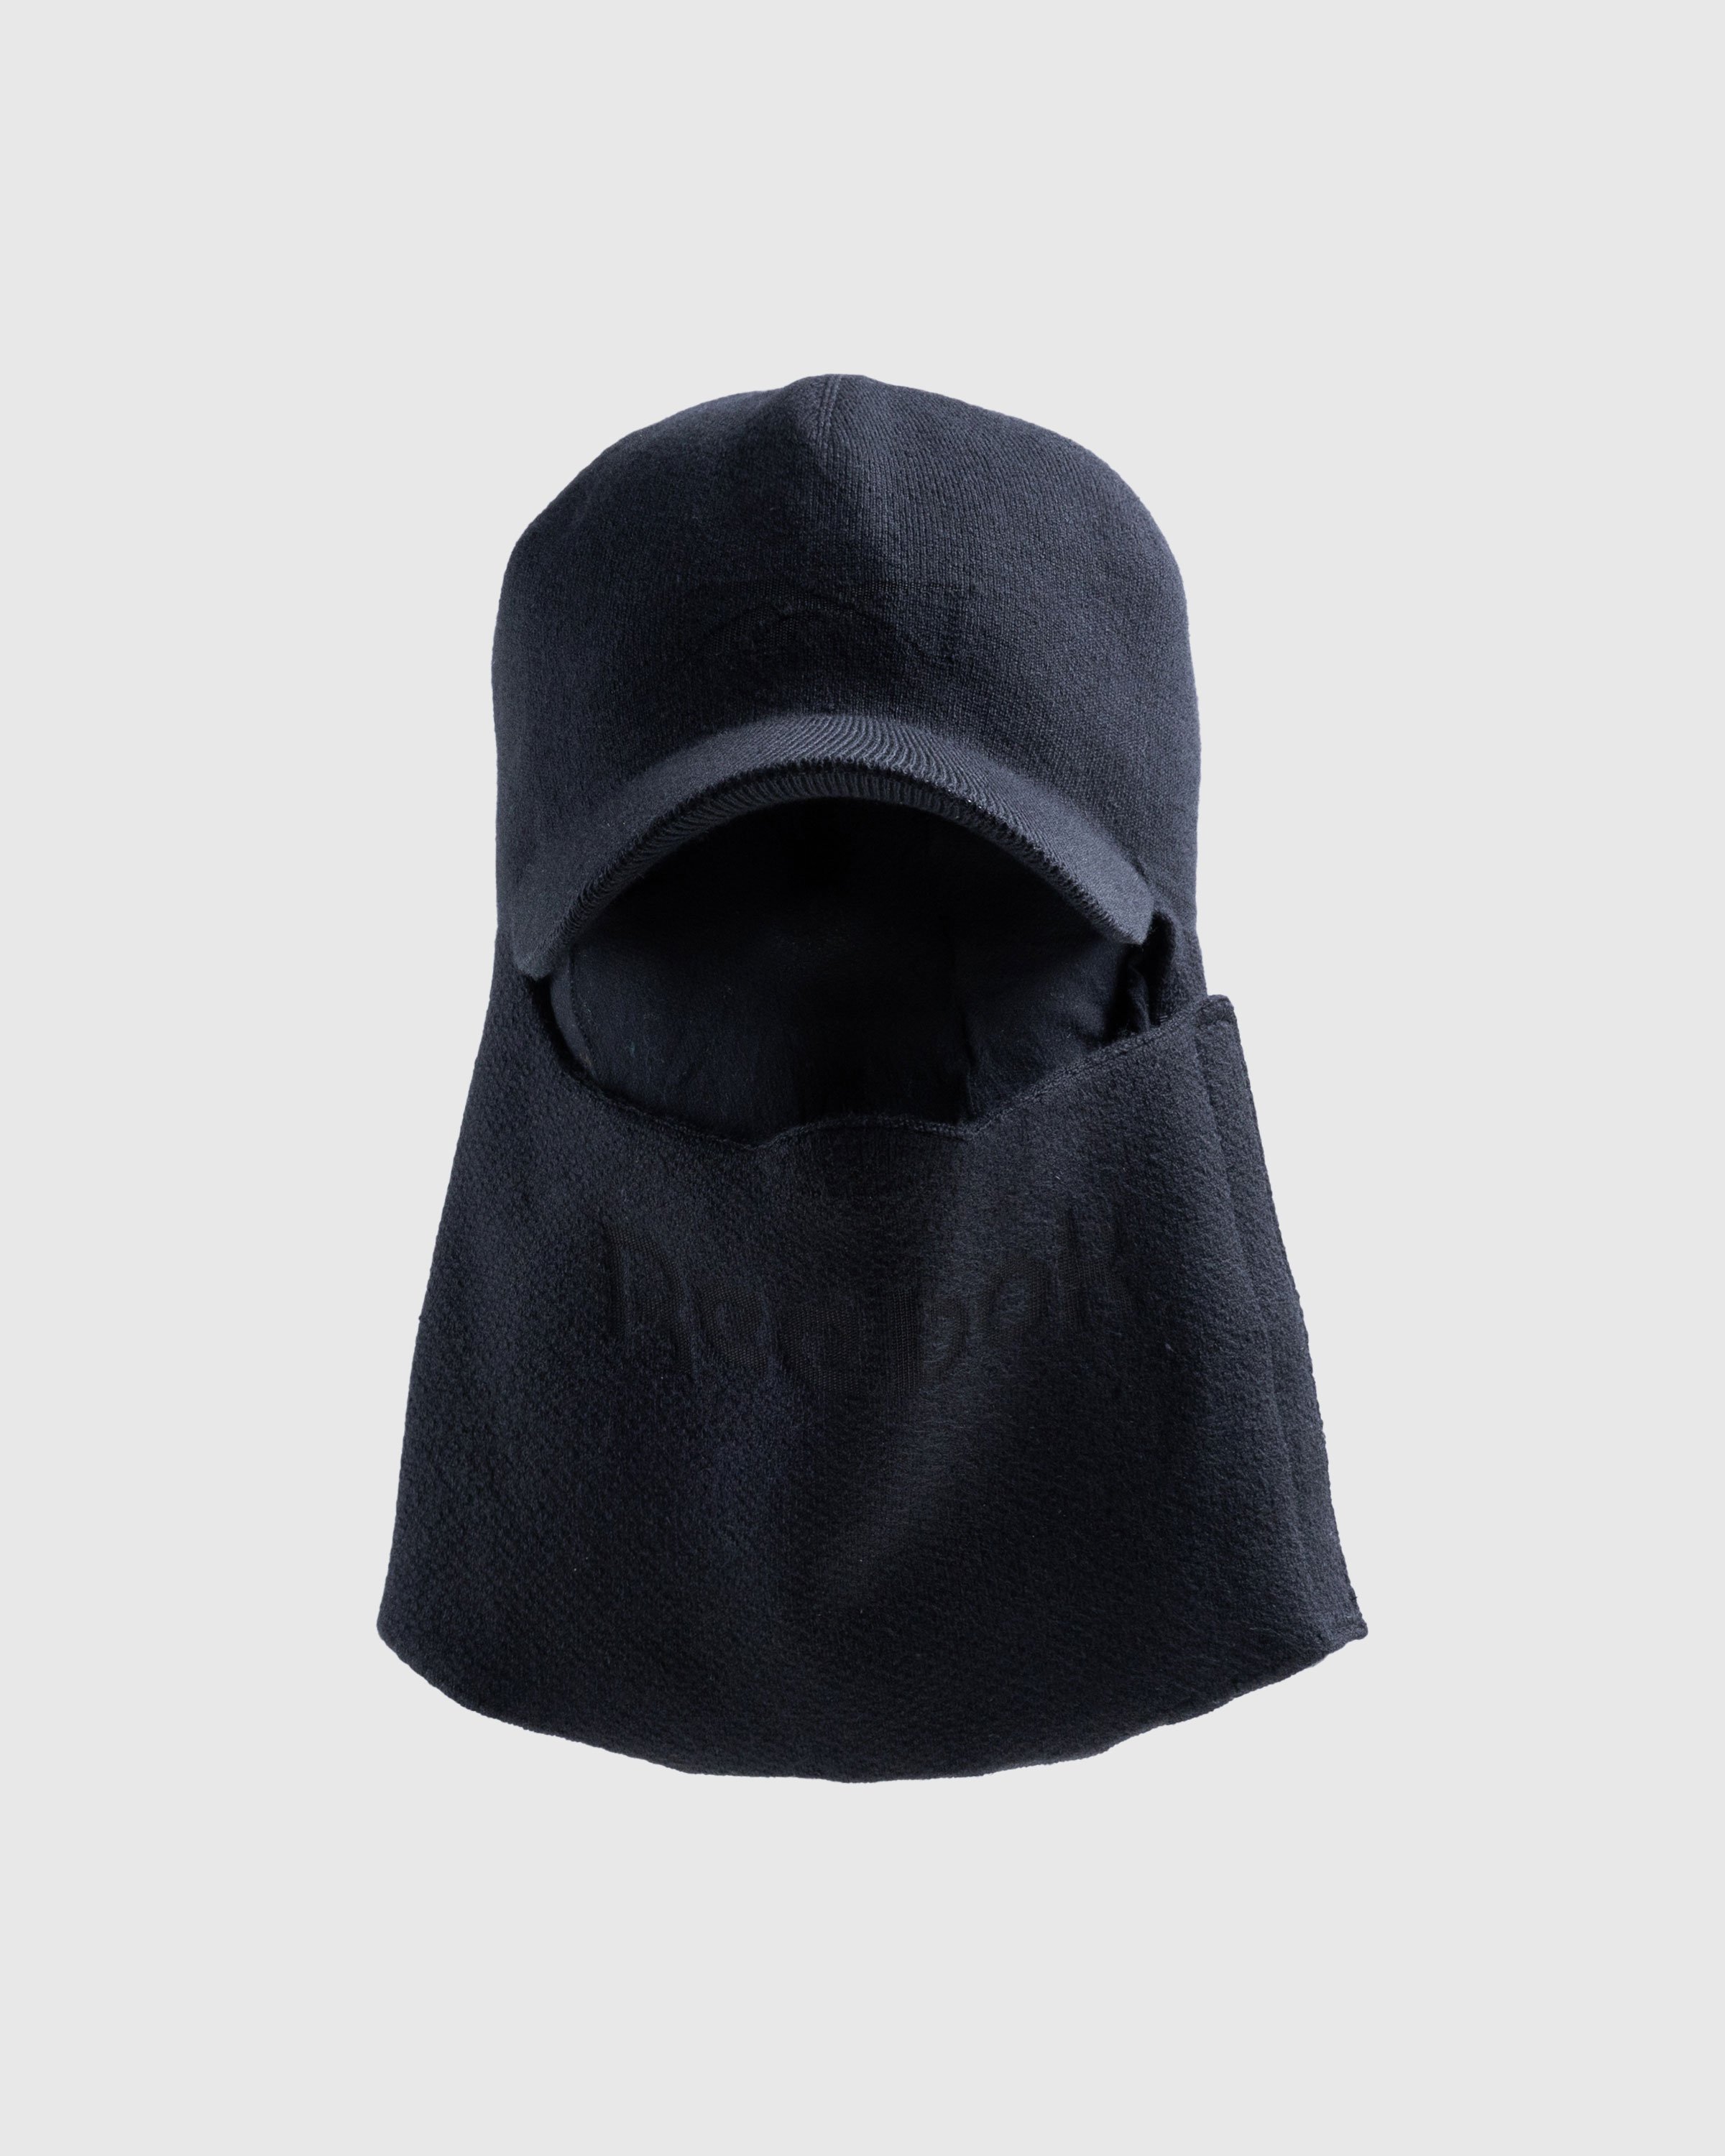 Reebok - Knit Mask Hat Black - Accessories - Black - Image 1